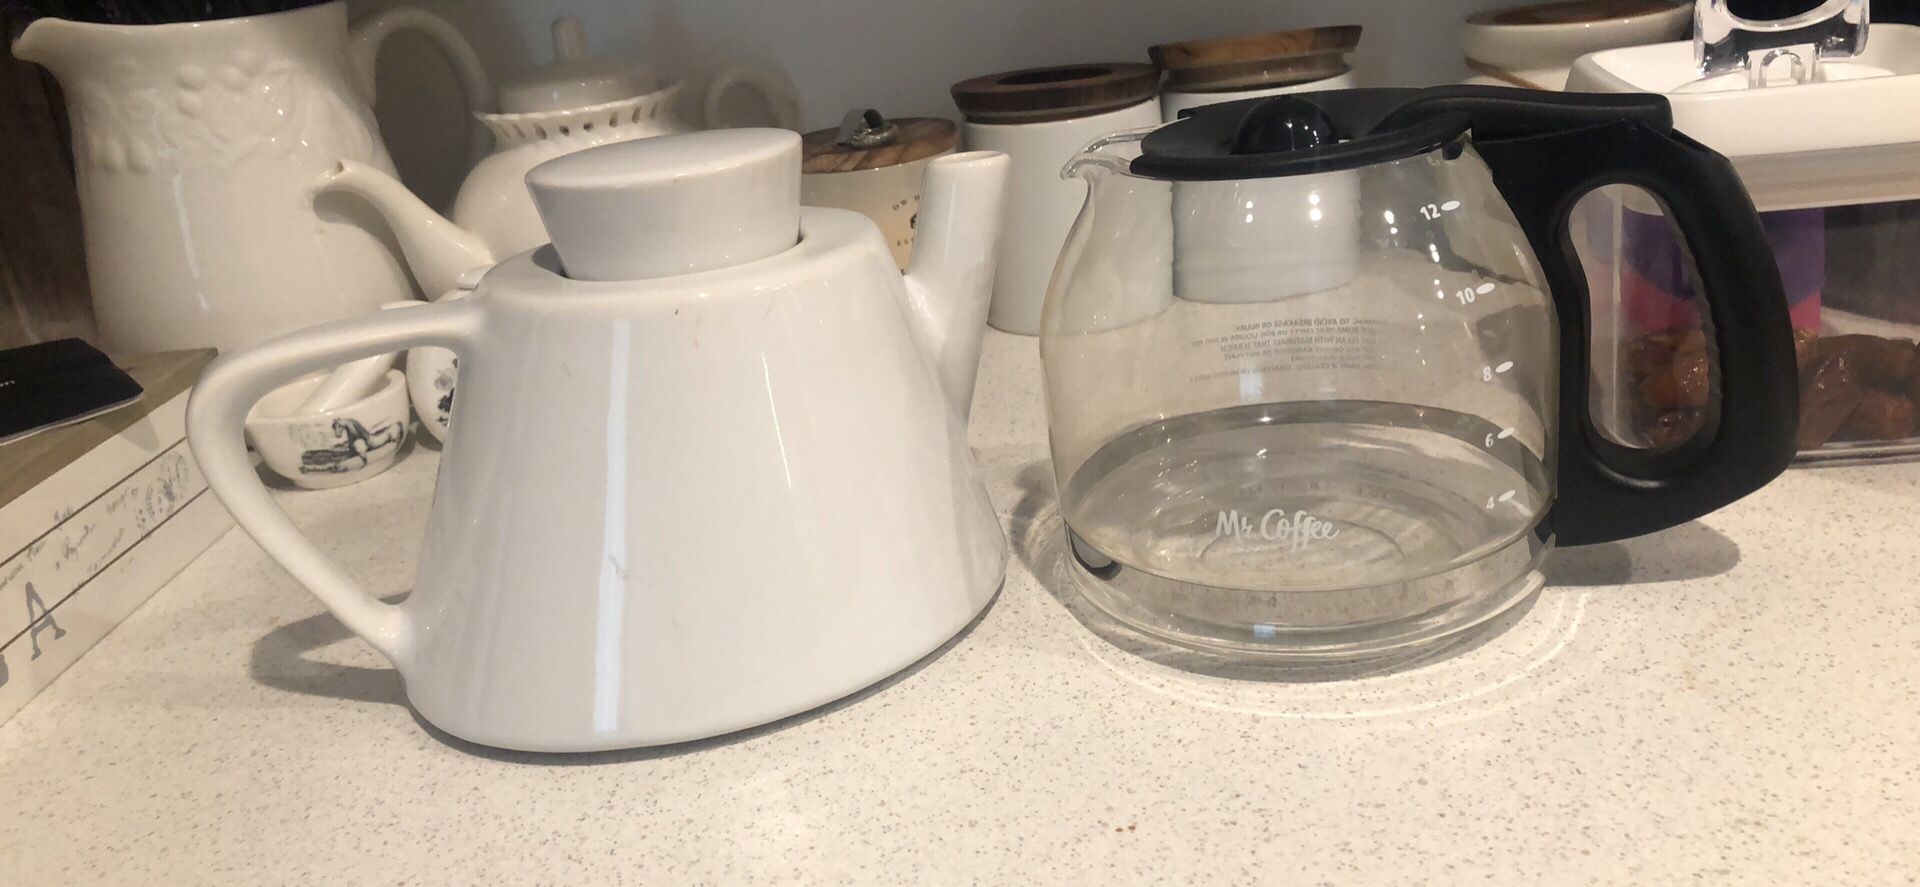 Ikea breakfast tea pot